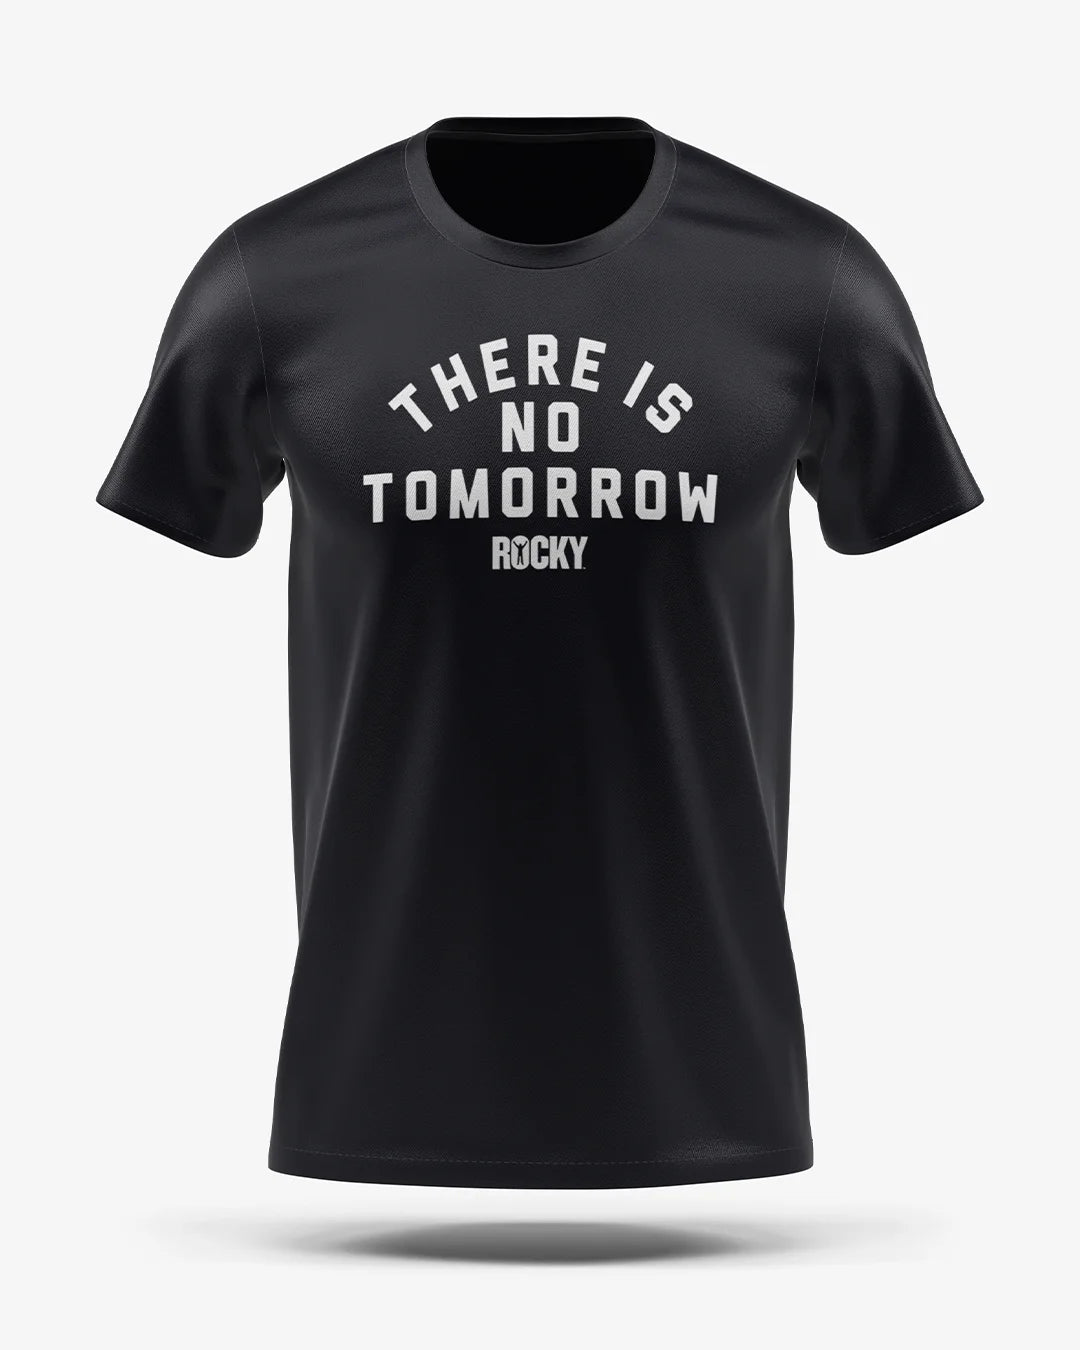 Camiseta Esporte Dry Fit - Rocky No Tomorrow